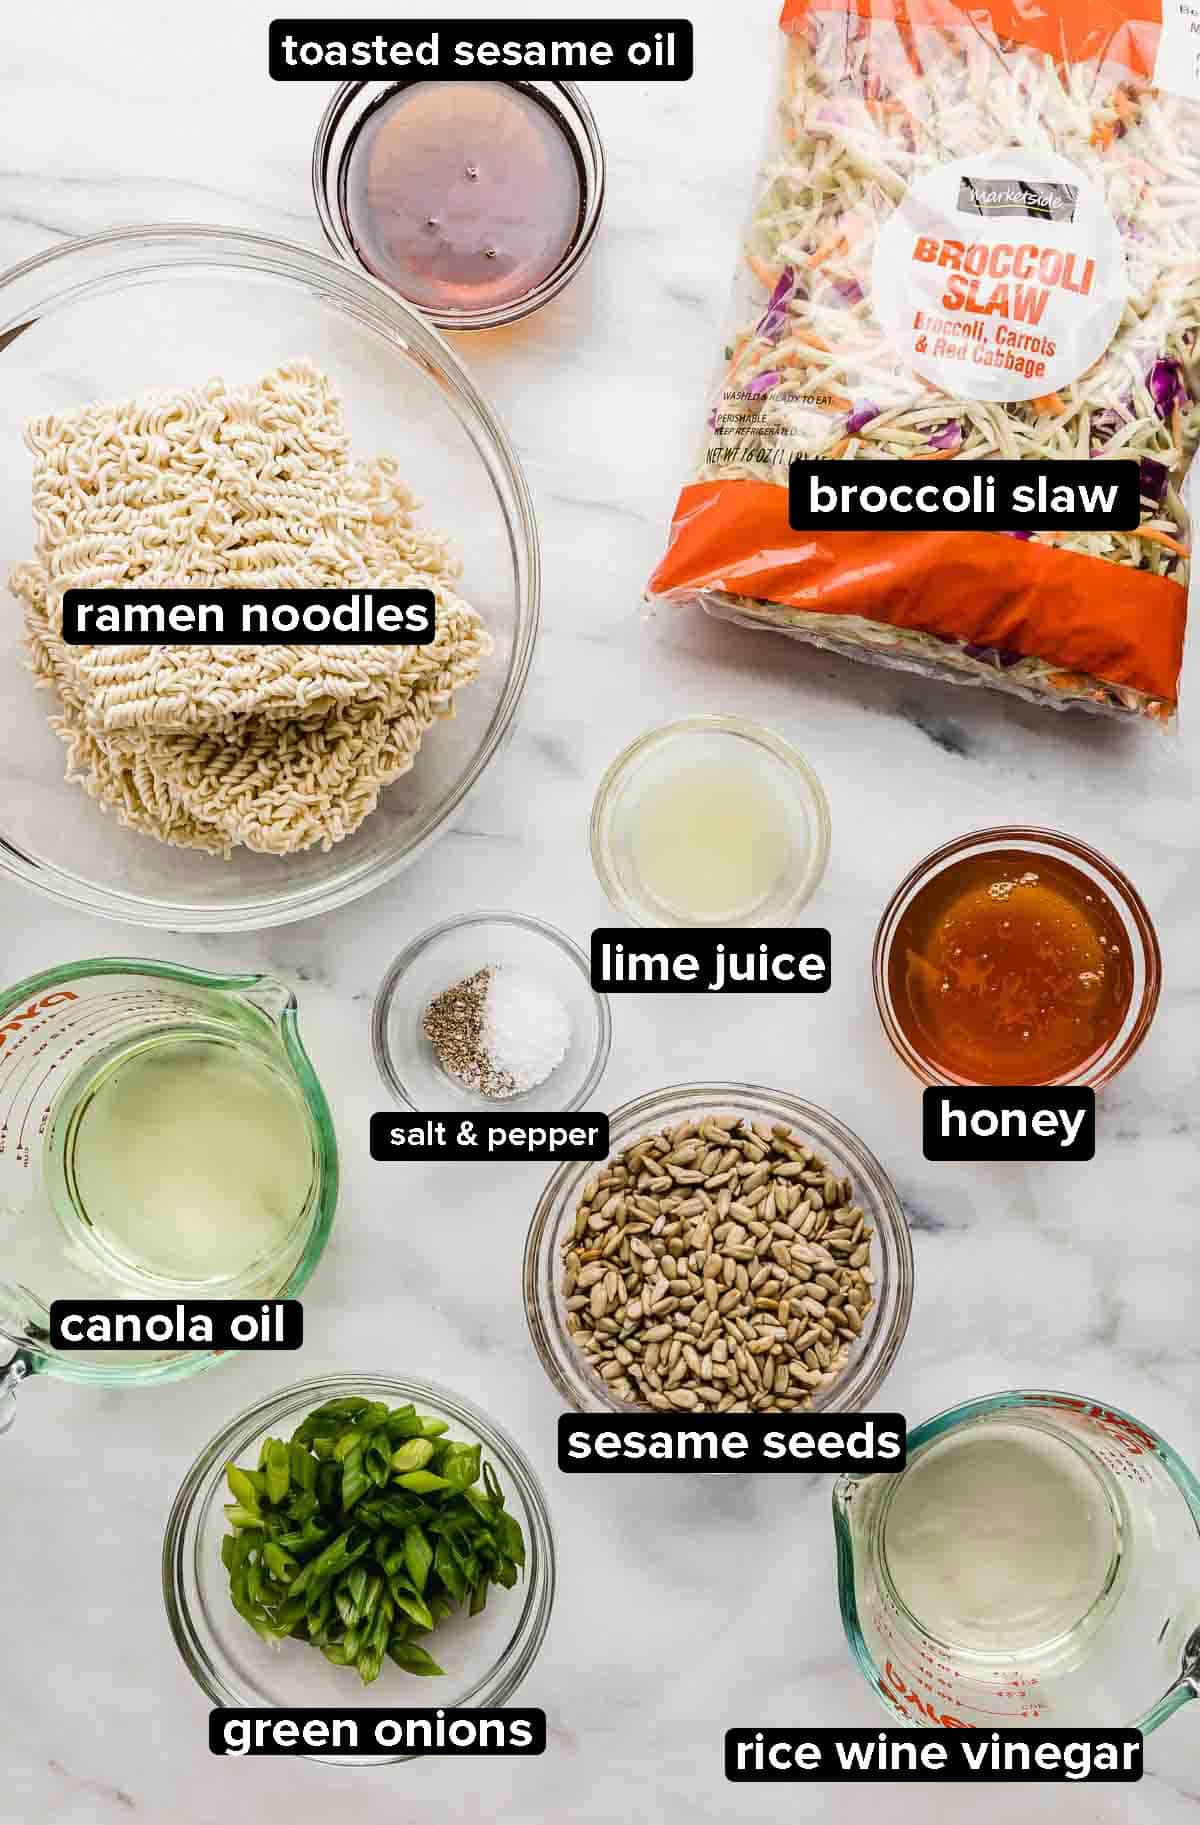 Asian style Broccoli Slaw ingredients on a marble background, including ramen noodles, broccoli slaw, sesame oil, honey, green onions, rice wine vinegar. 